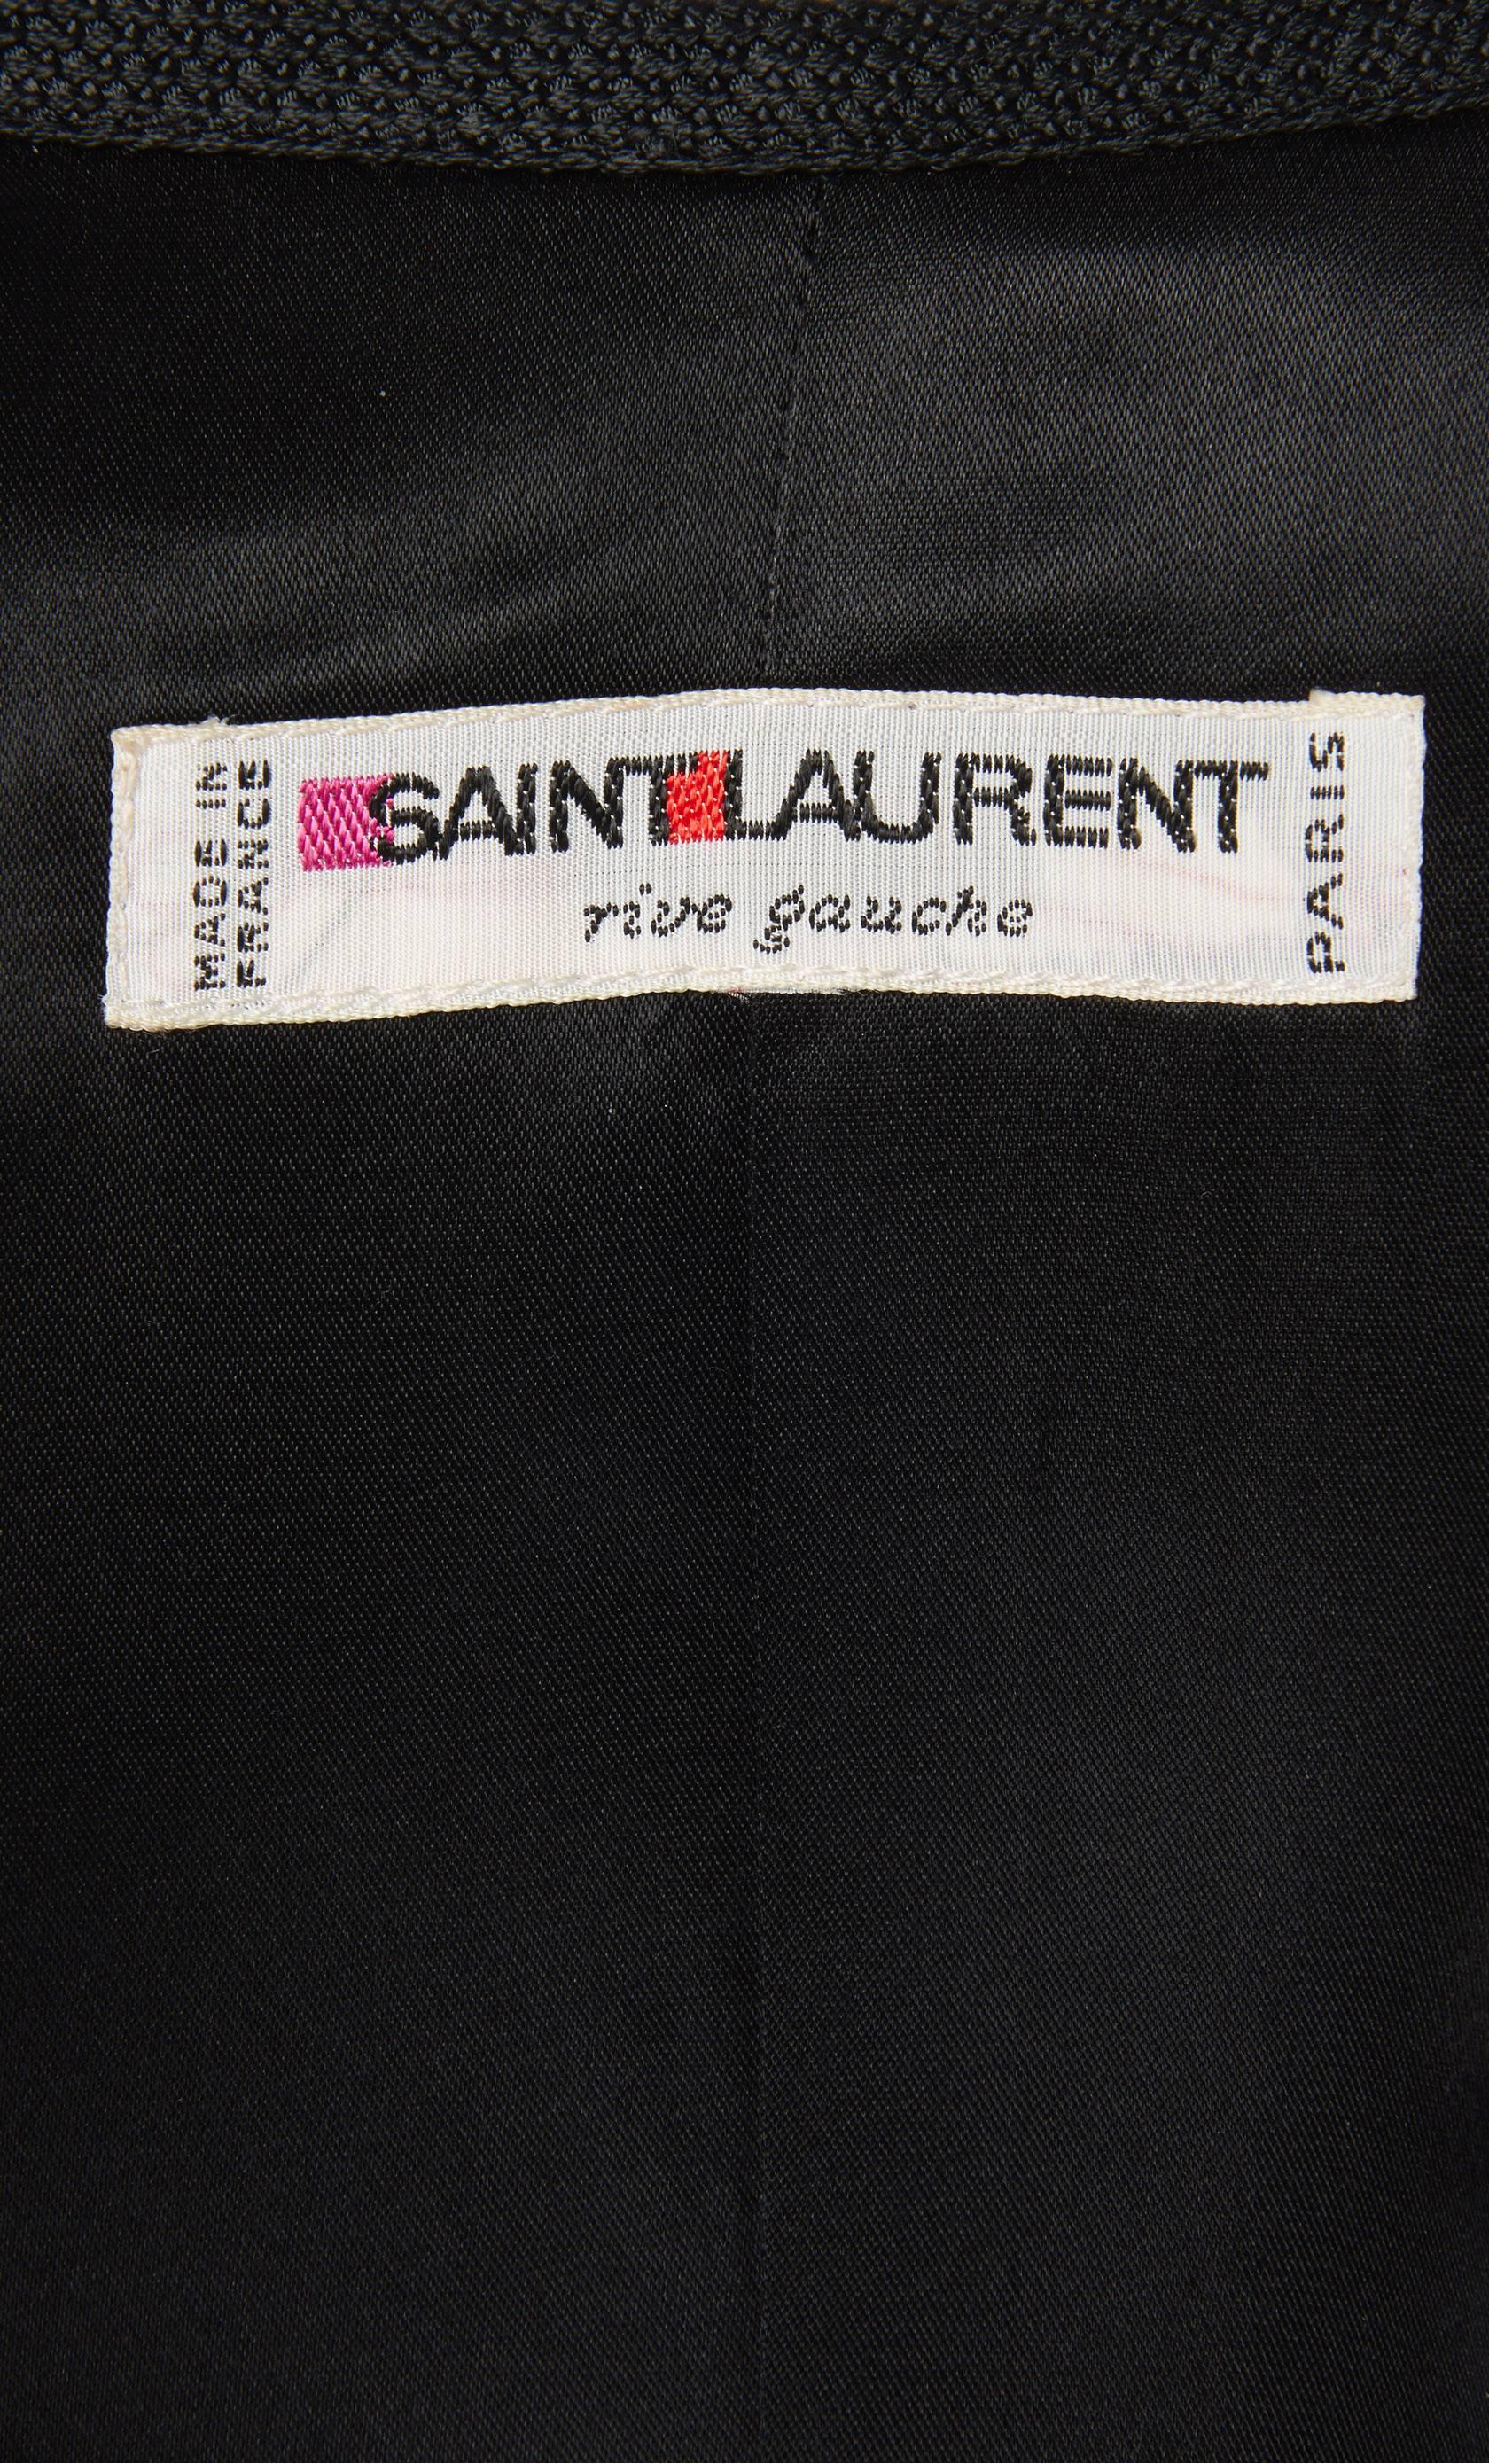 Women's Yves Saint Laurent black jacket, circa 1977